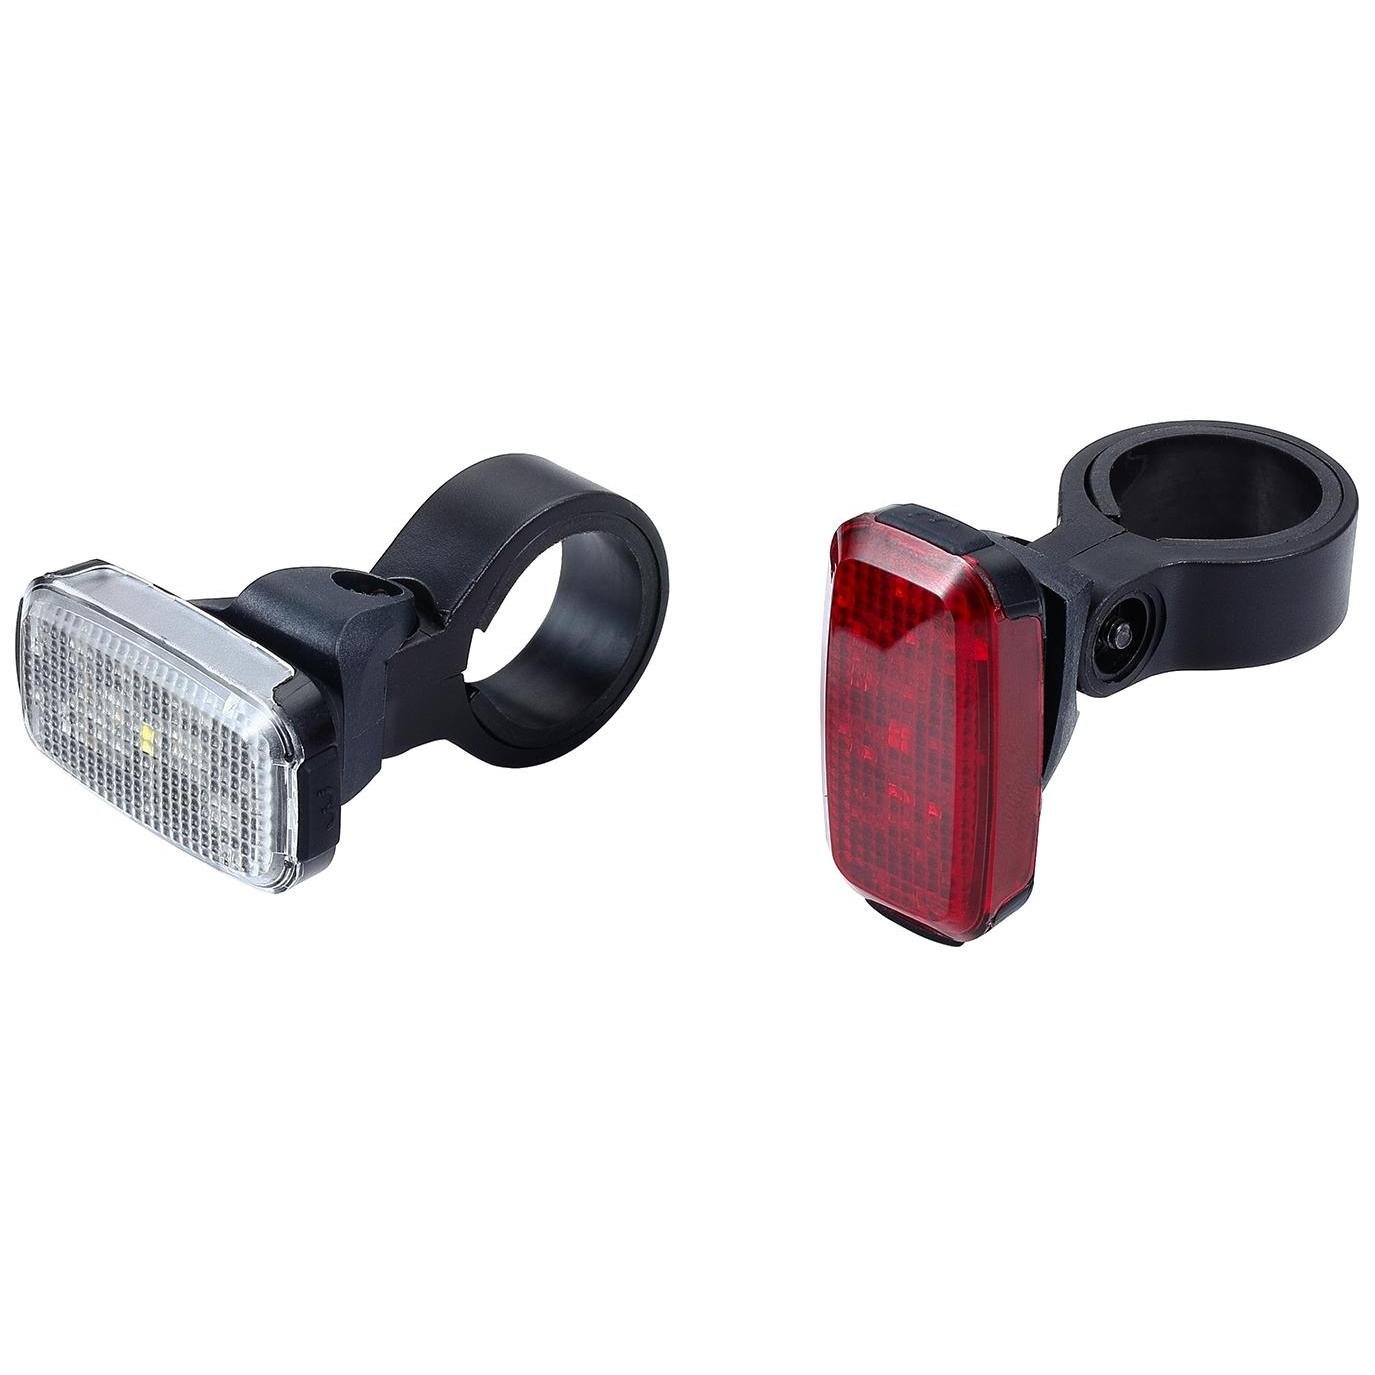 Фонари велосипедные (комплект) BBB 2019 lightset Spot combo, BLS-148 фонари xlc battery headlight set sirius b20 20 lux комплект 2500225010